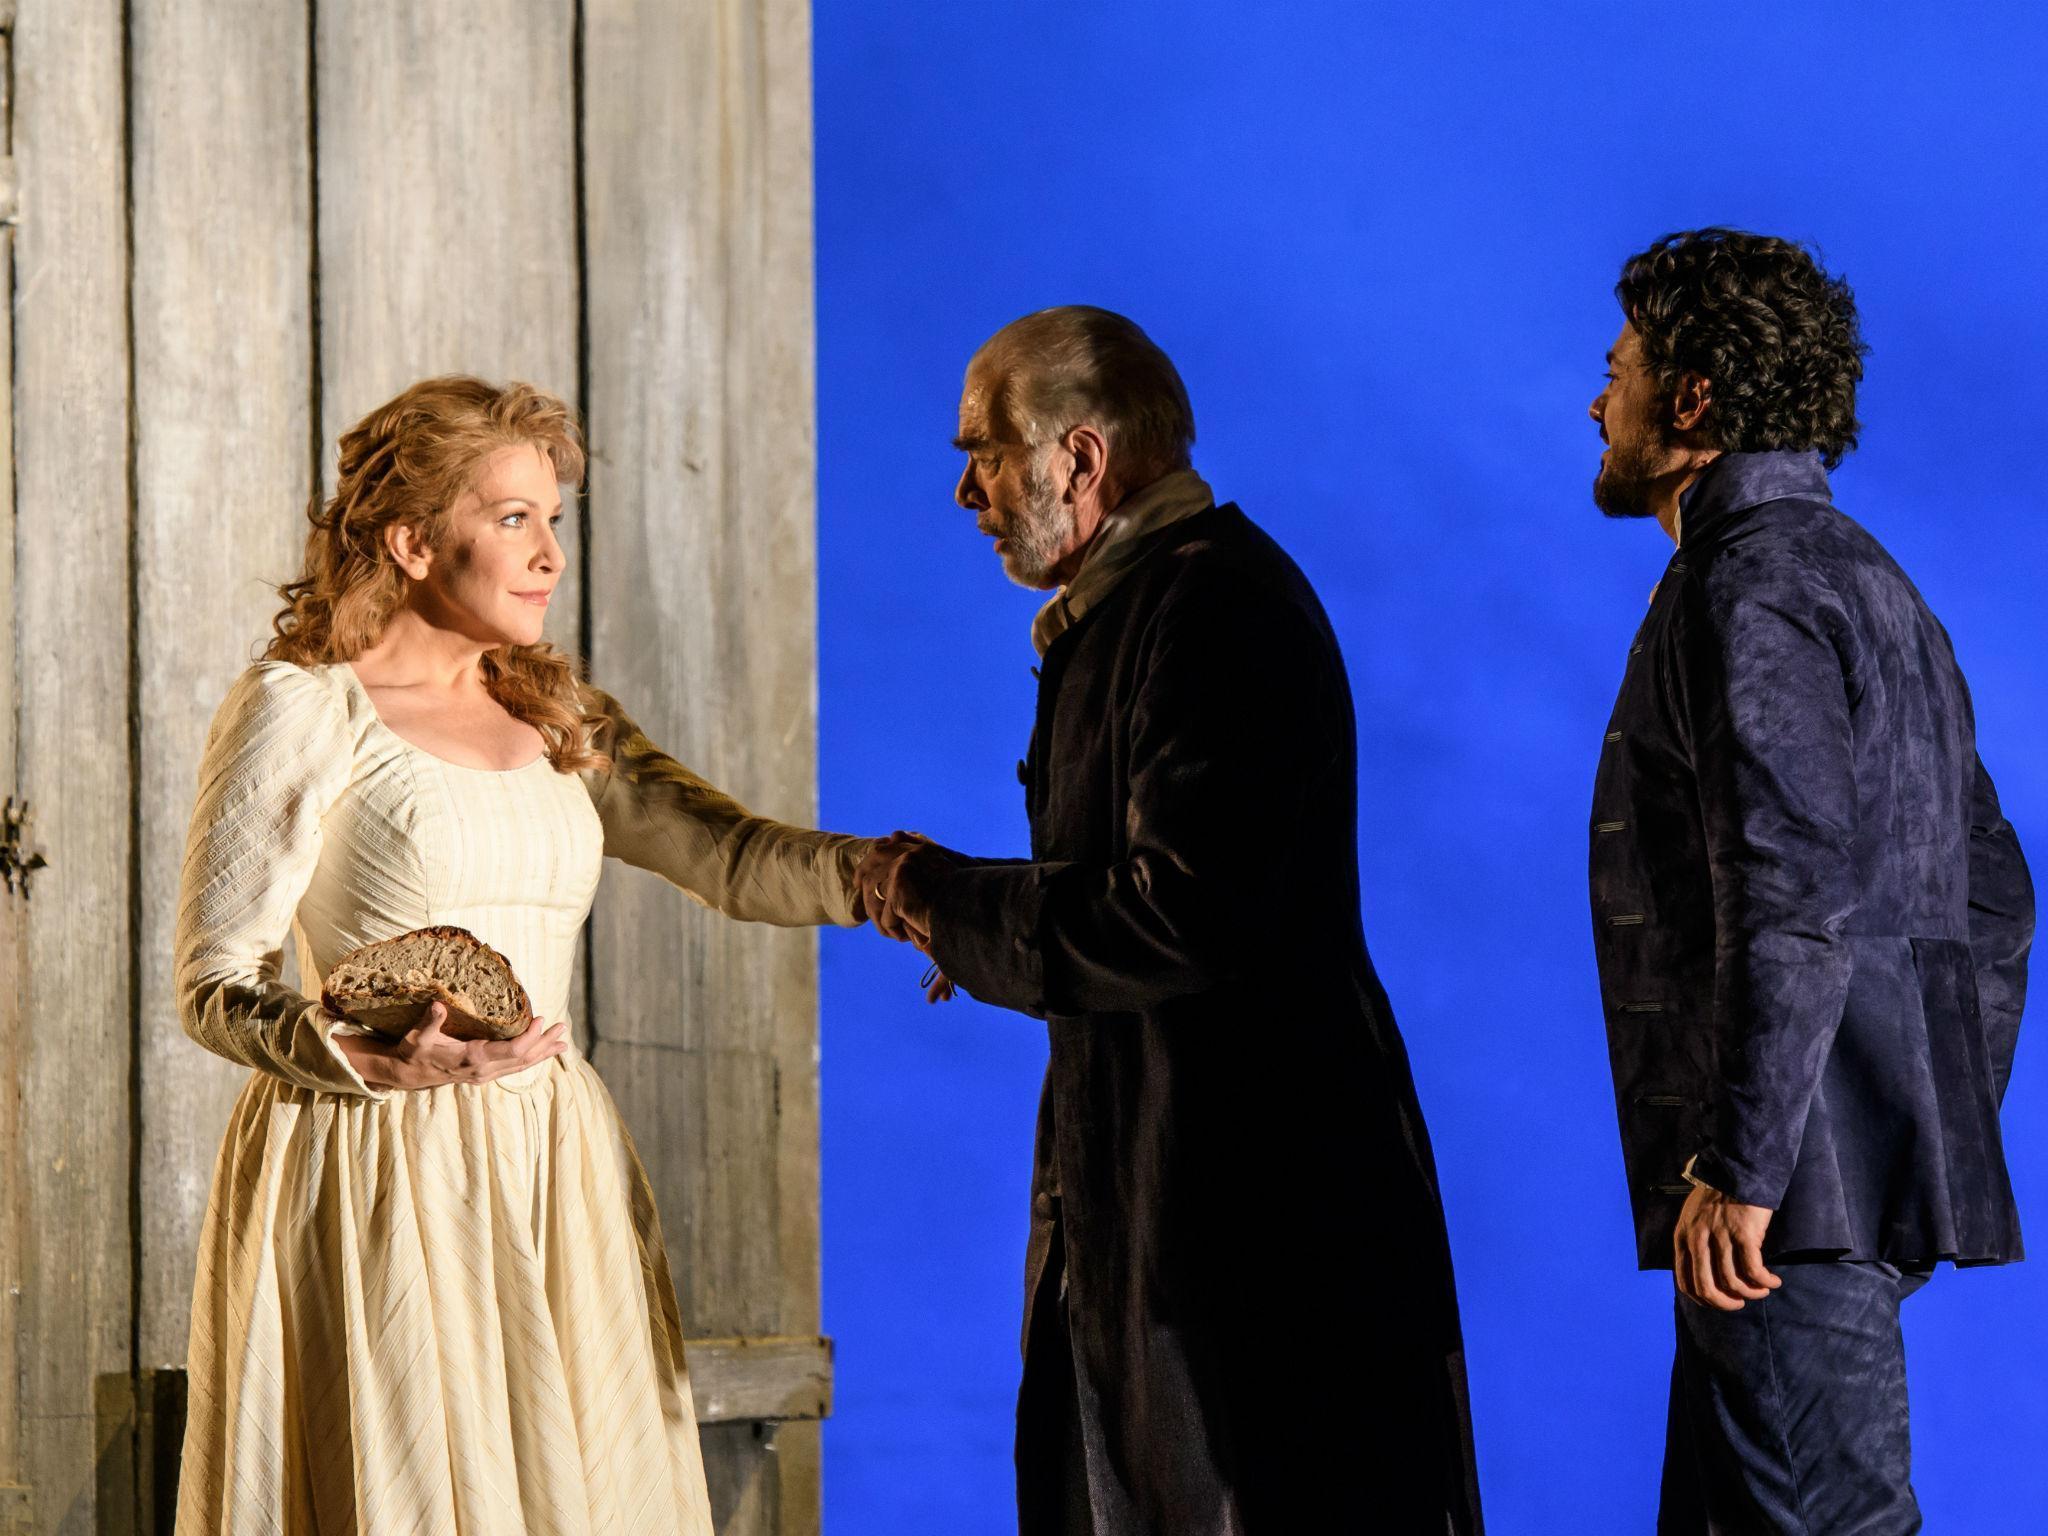 Joyce Didonato as Charlotte, Jonathan Summers as Le Bailli and Vittorio Grigolo as Werther